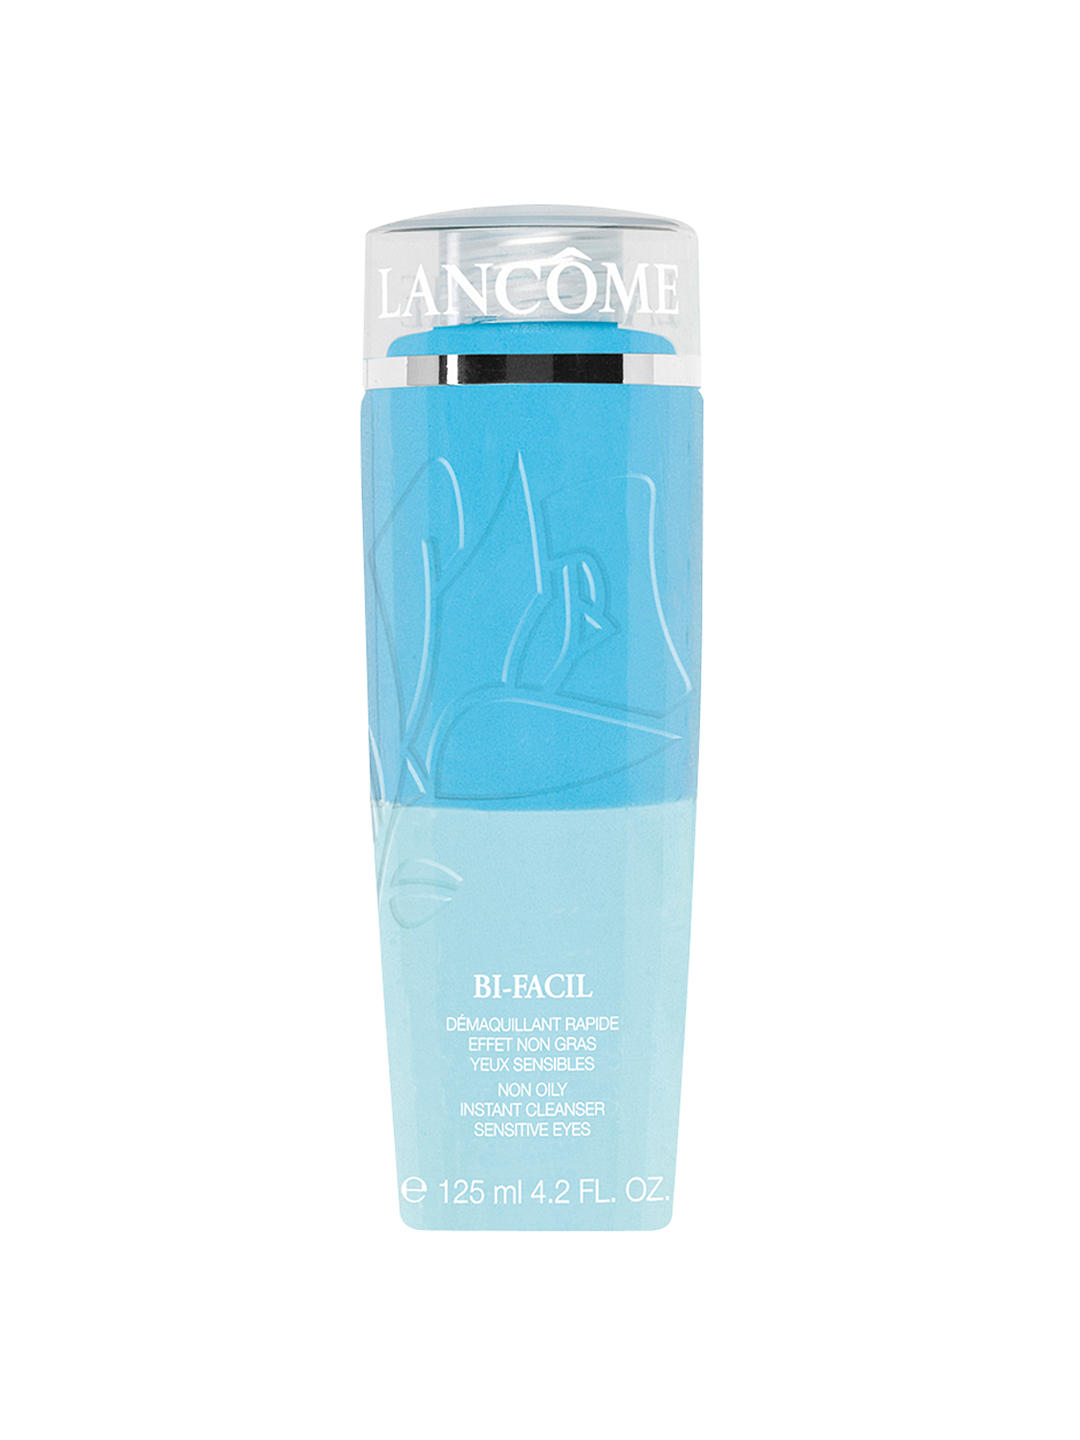 Lancôme Bi-Facil Non Oily Instant Cleanser Sensitive Eyes, 125ml 1